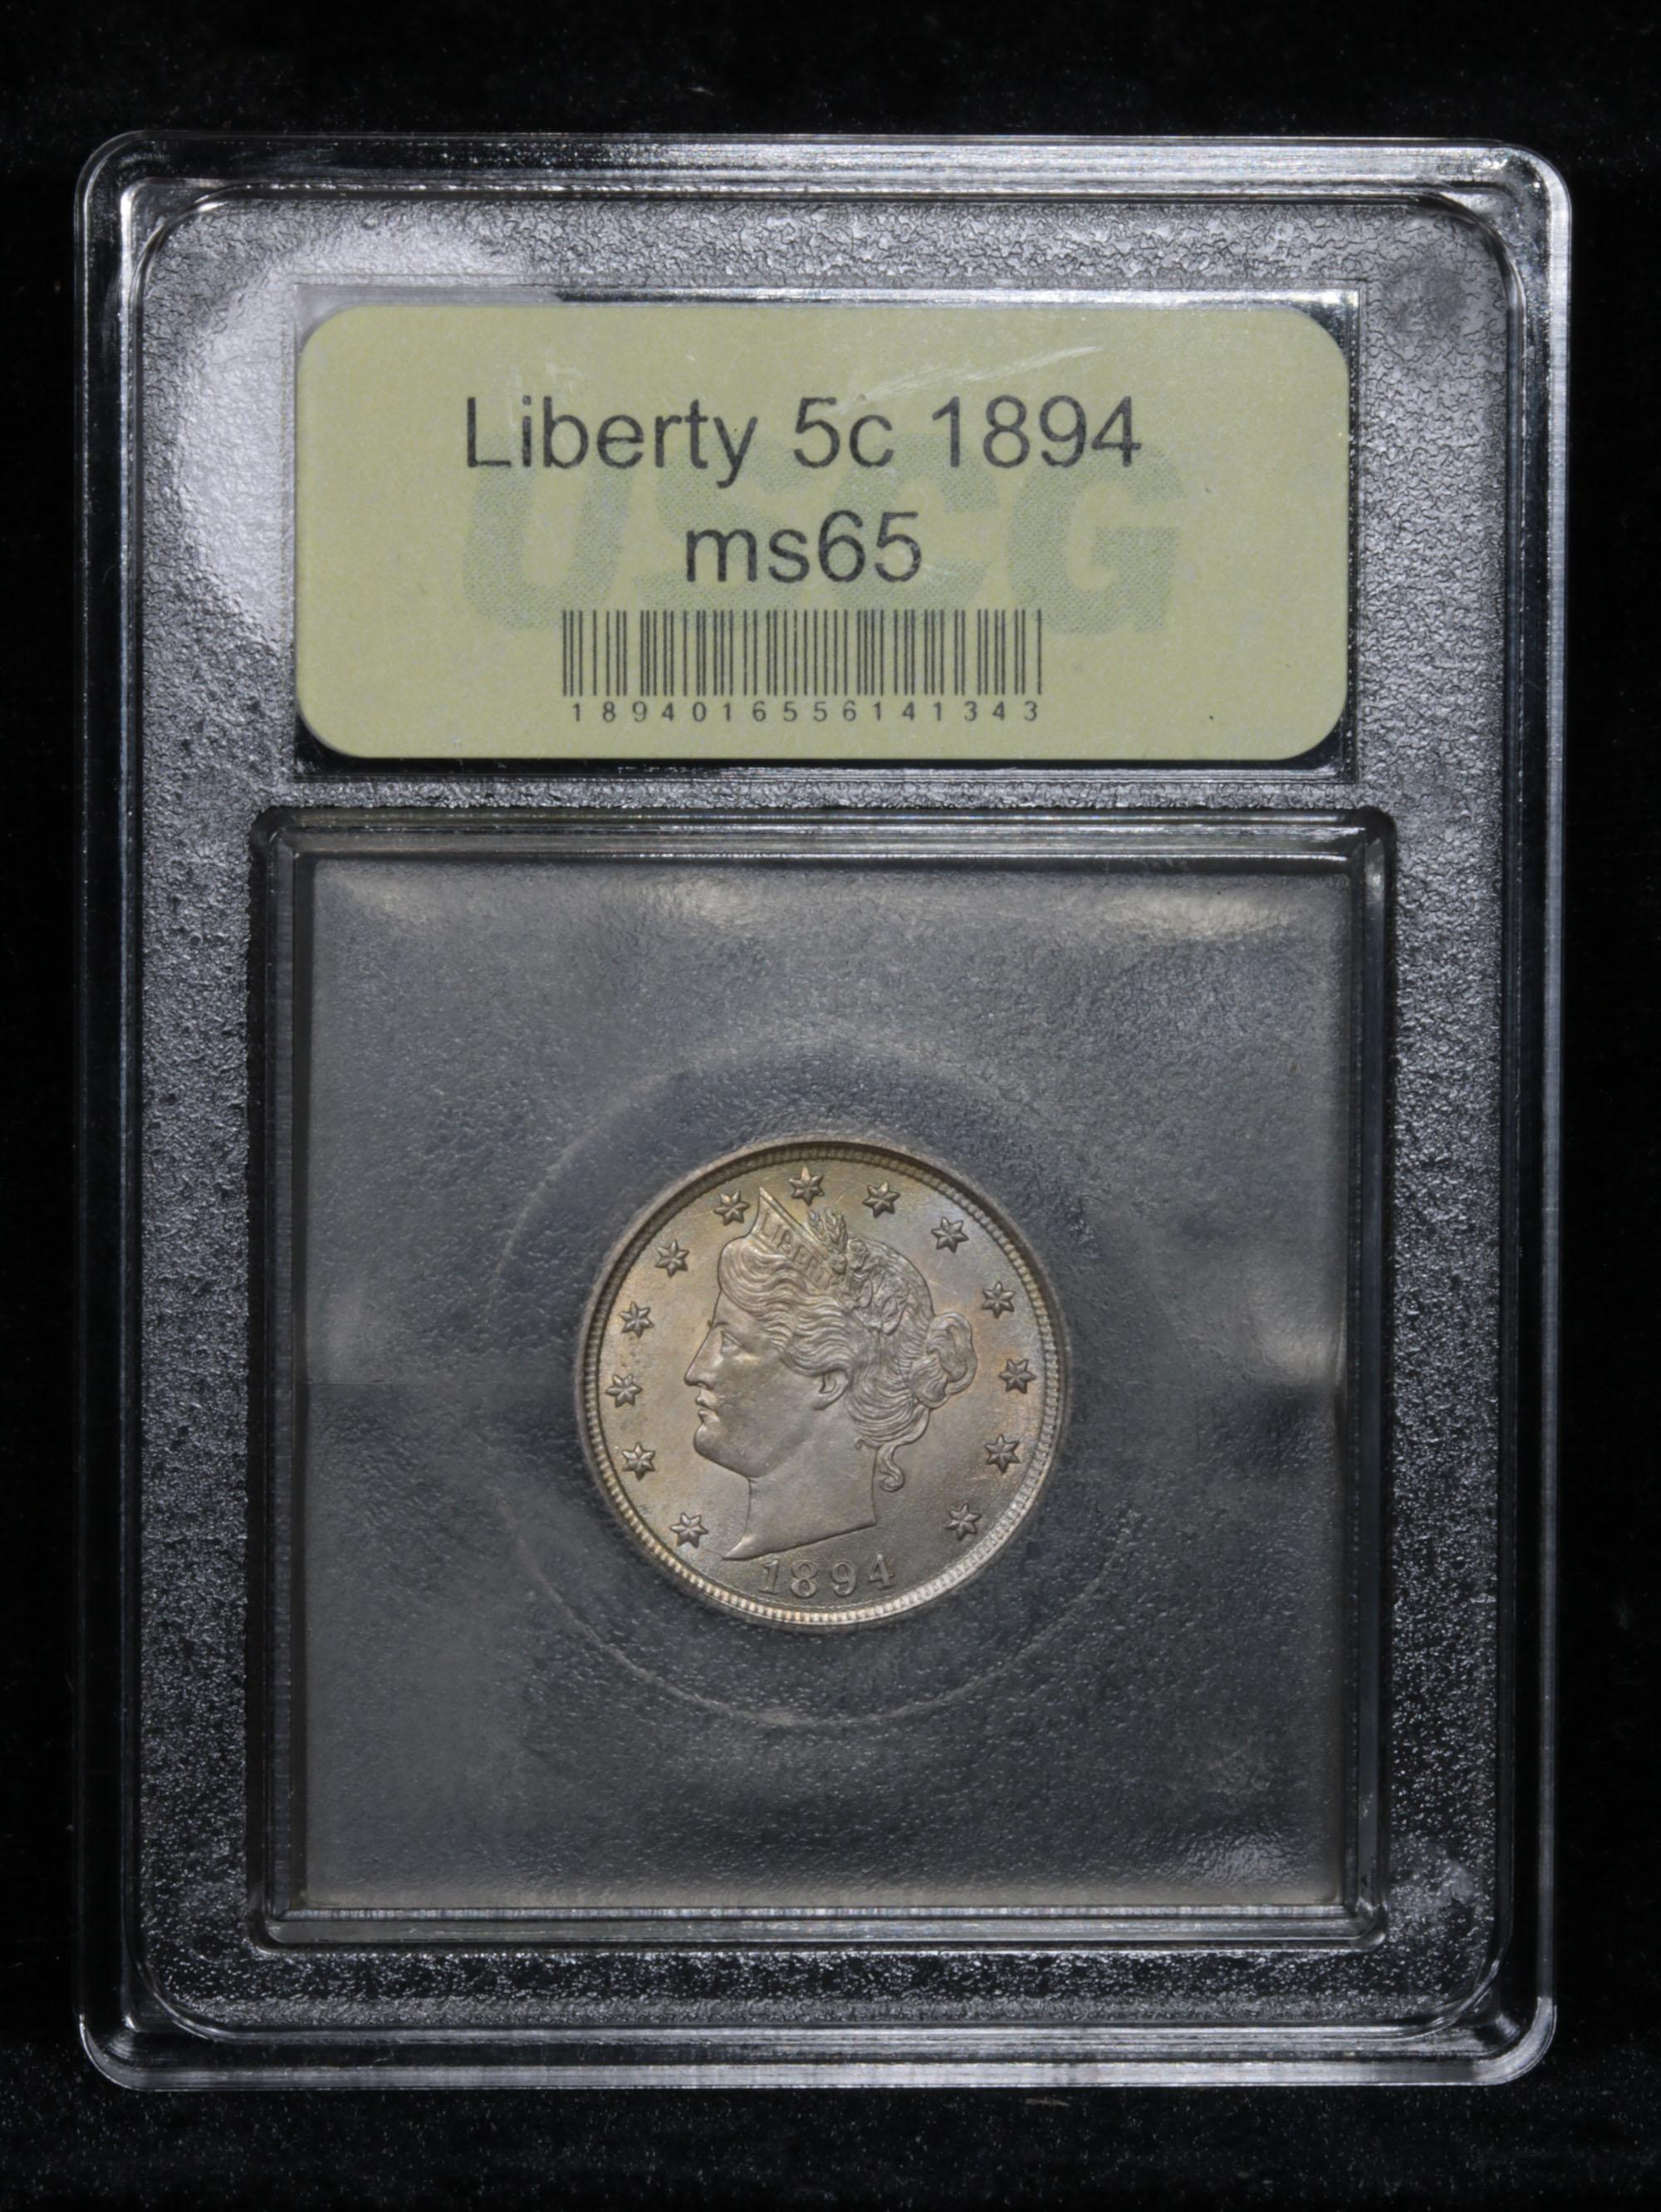 ***Auction Highlight*** 1894 Liberty Nickel 5c Graded GEM Unc by USCG (fc)